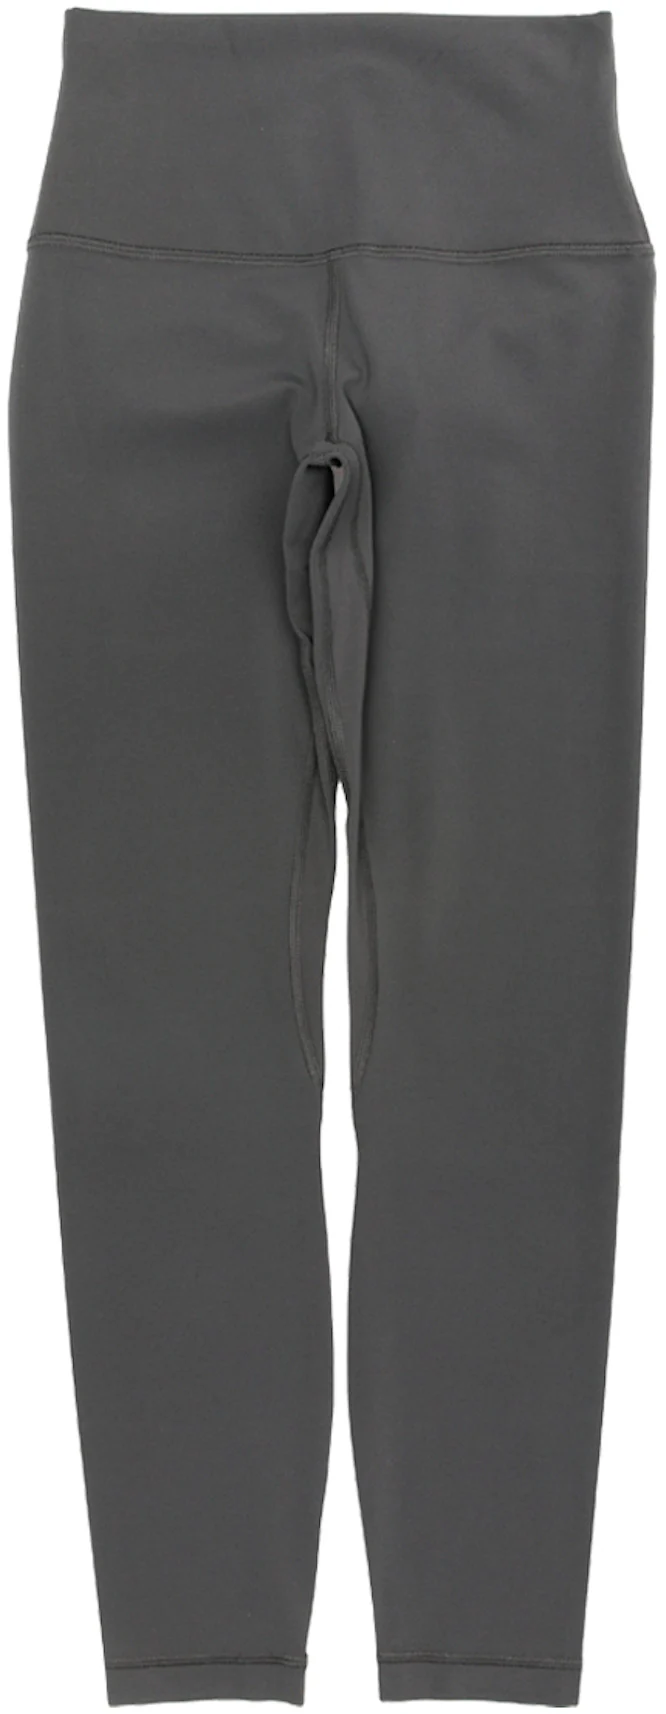 Lululemon Align High-rise Stretch-woven Leggings - Graphite Grey